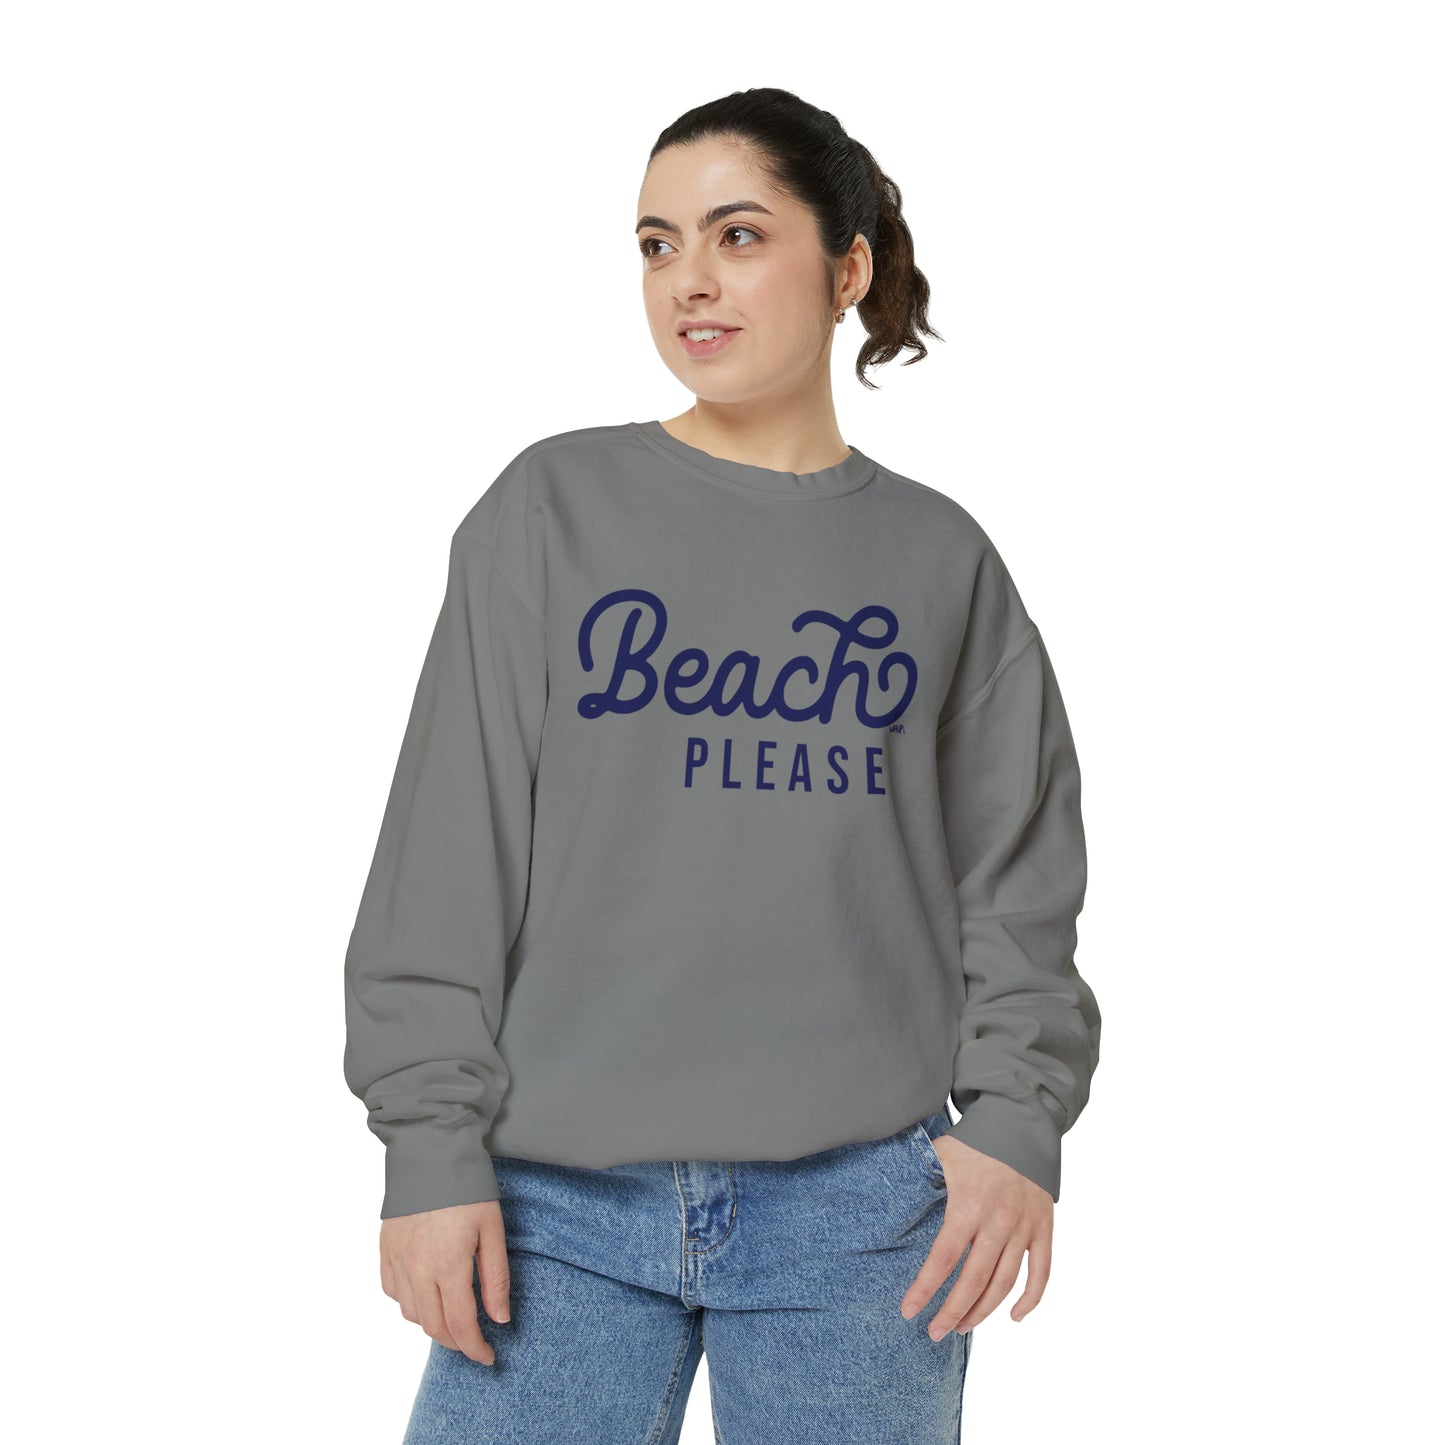 Beach Please Sweatshirt